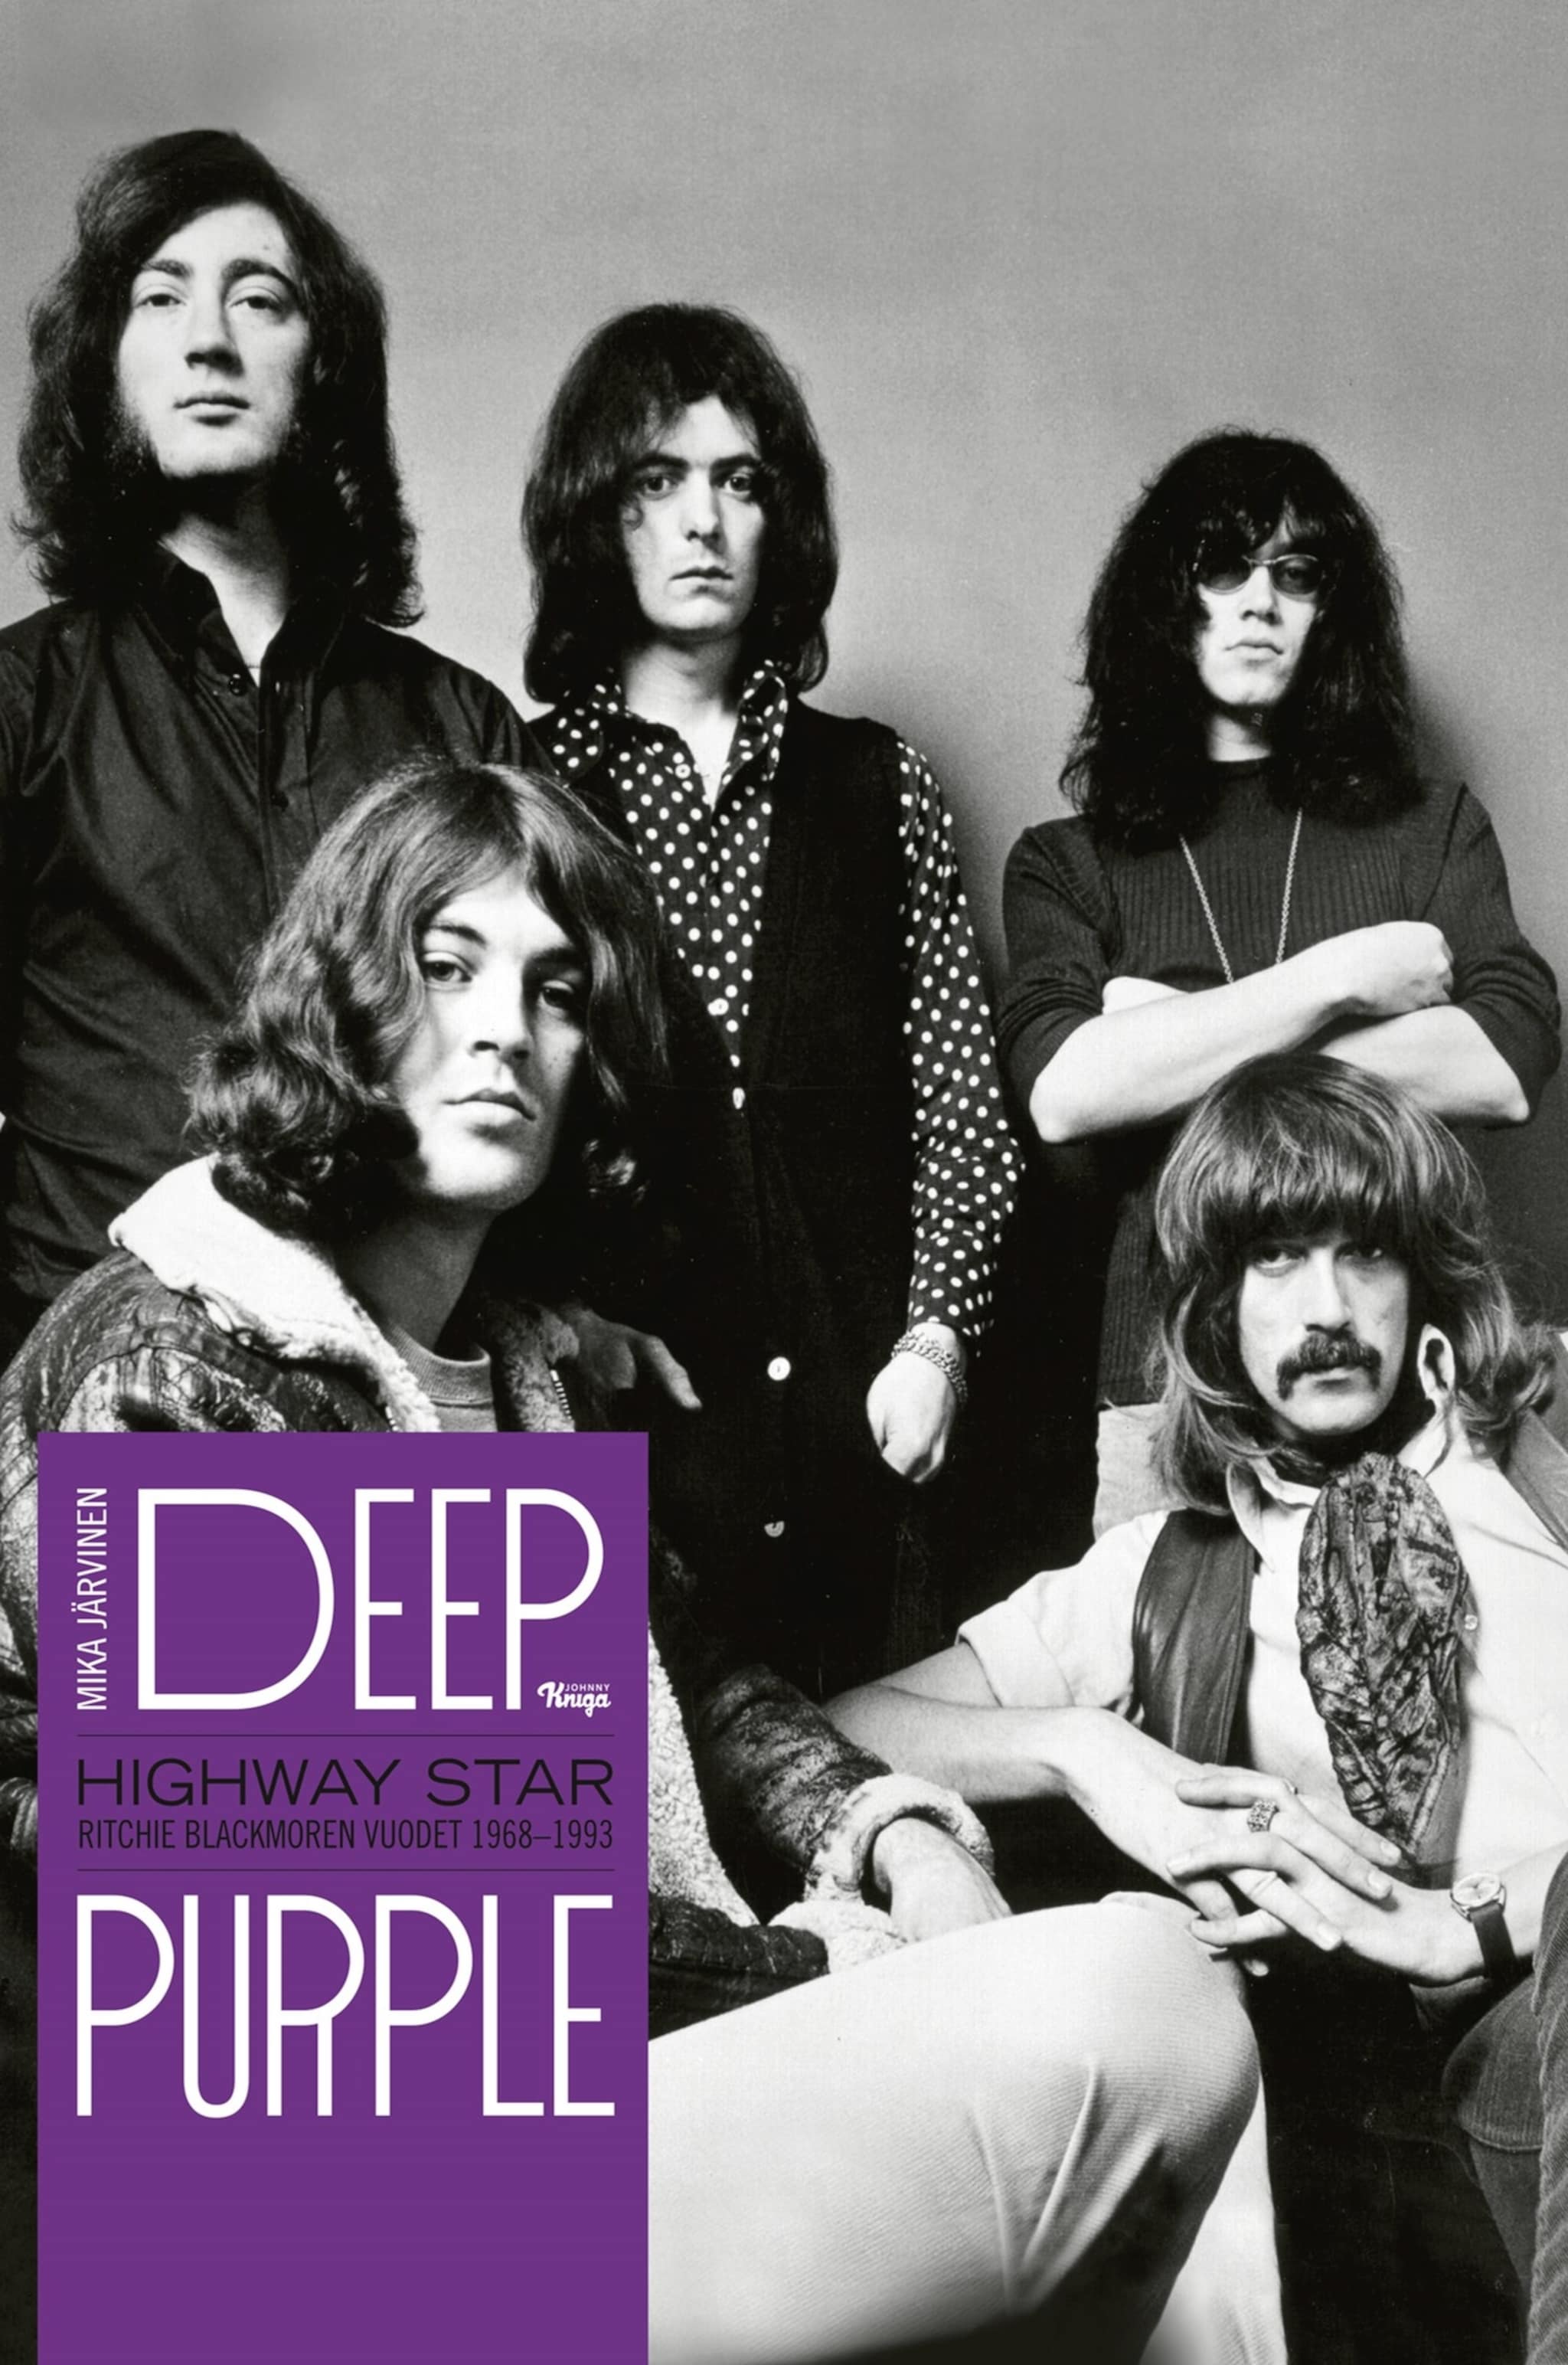 Deep Purple : Highway star,Ritchie Blackmoren vuodet 1968-1993 ilmaiseksi